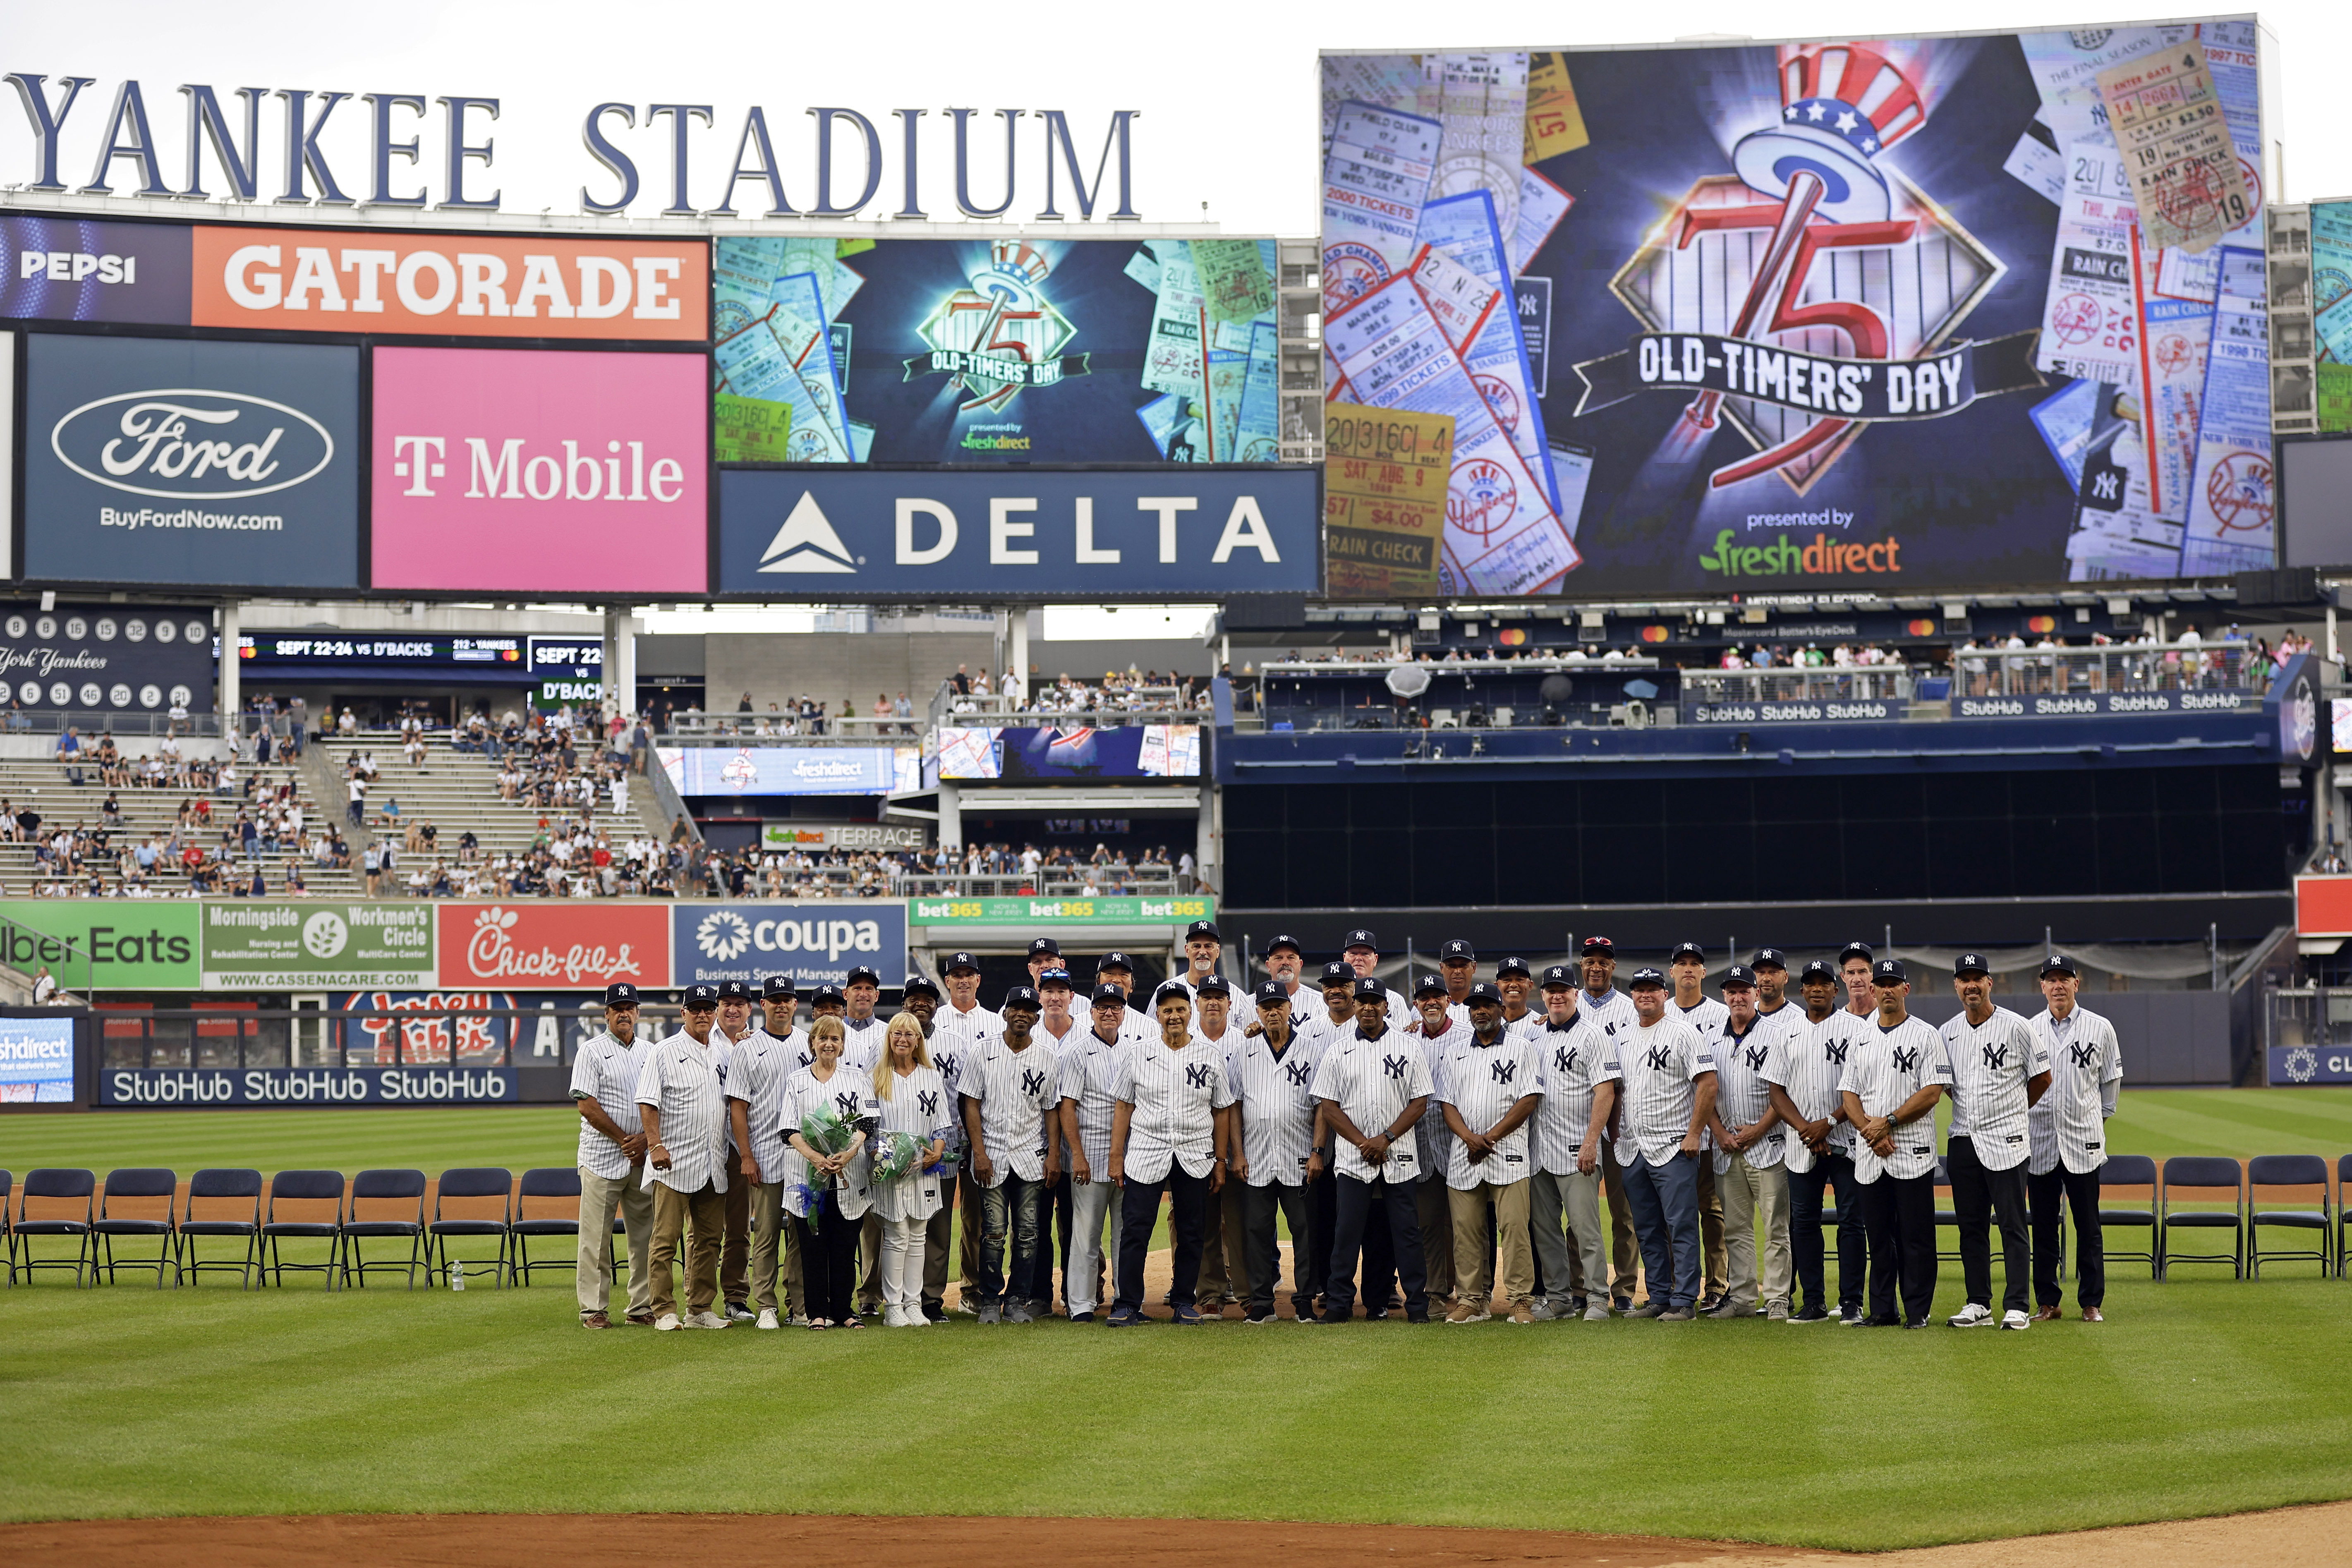 Derek Jeter back as Yankees honor '98 team at Old-Timers' Day - ESPN